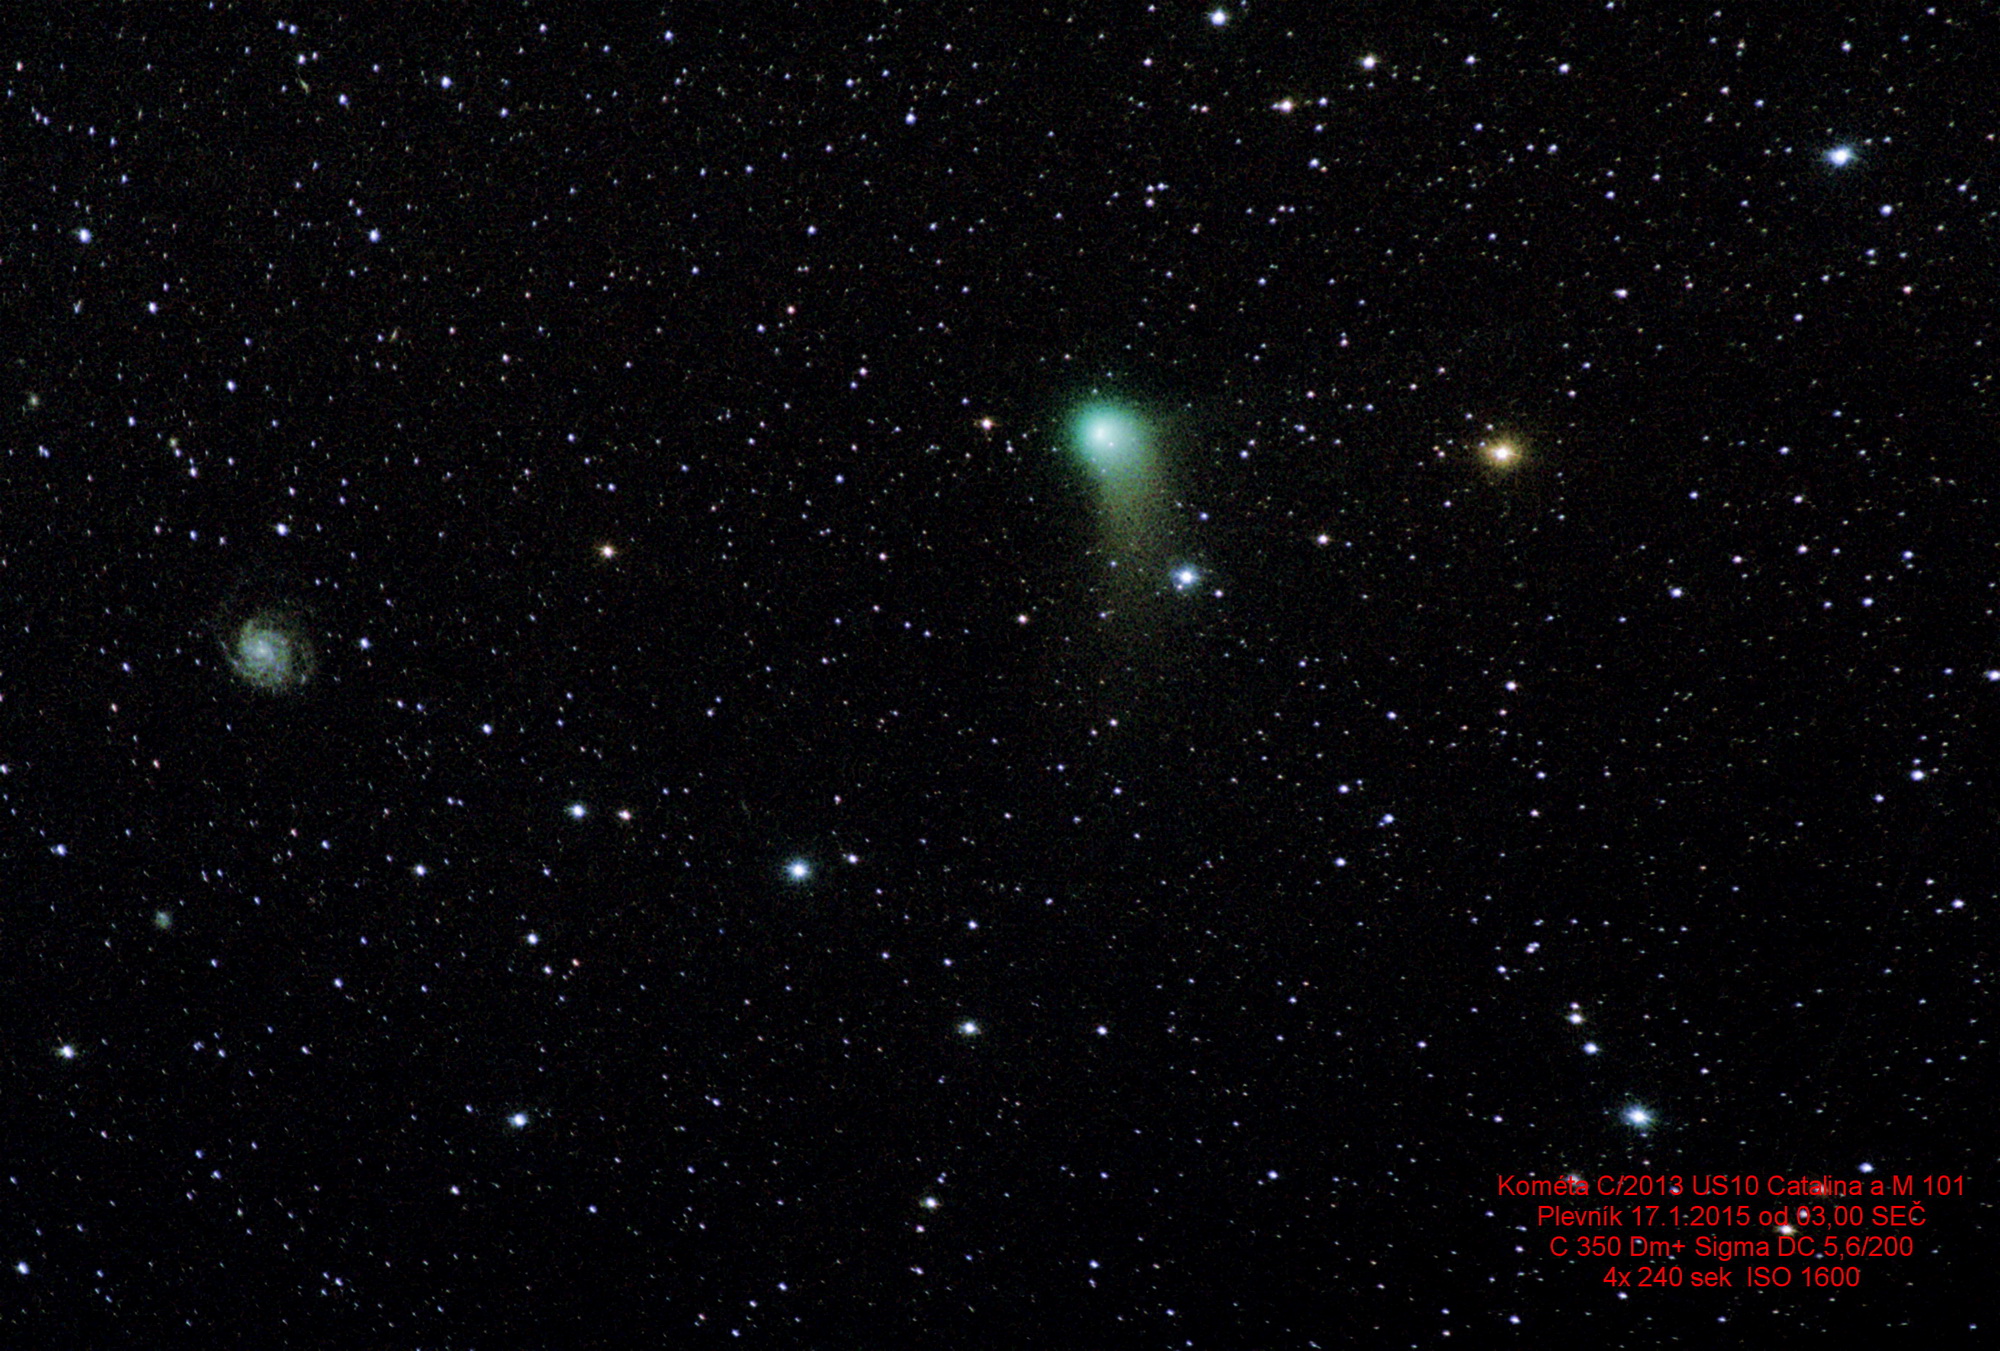 Catalina a M101